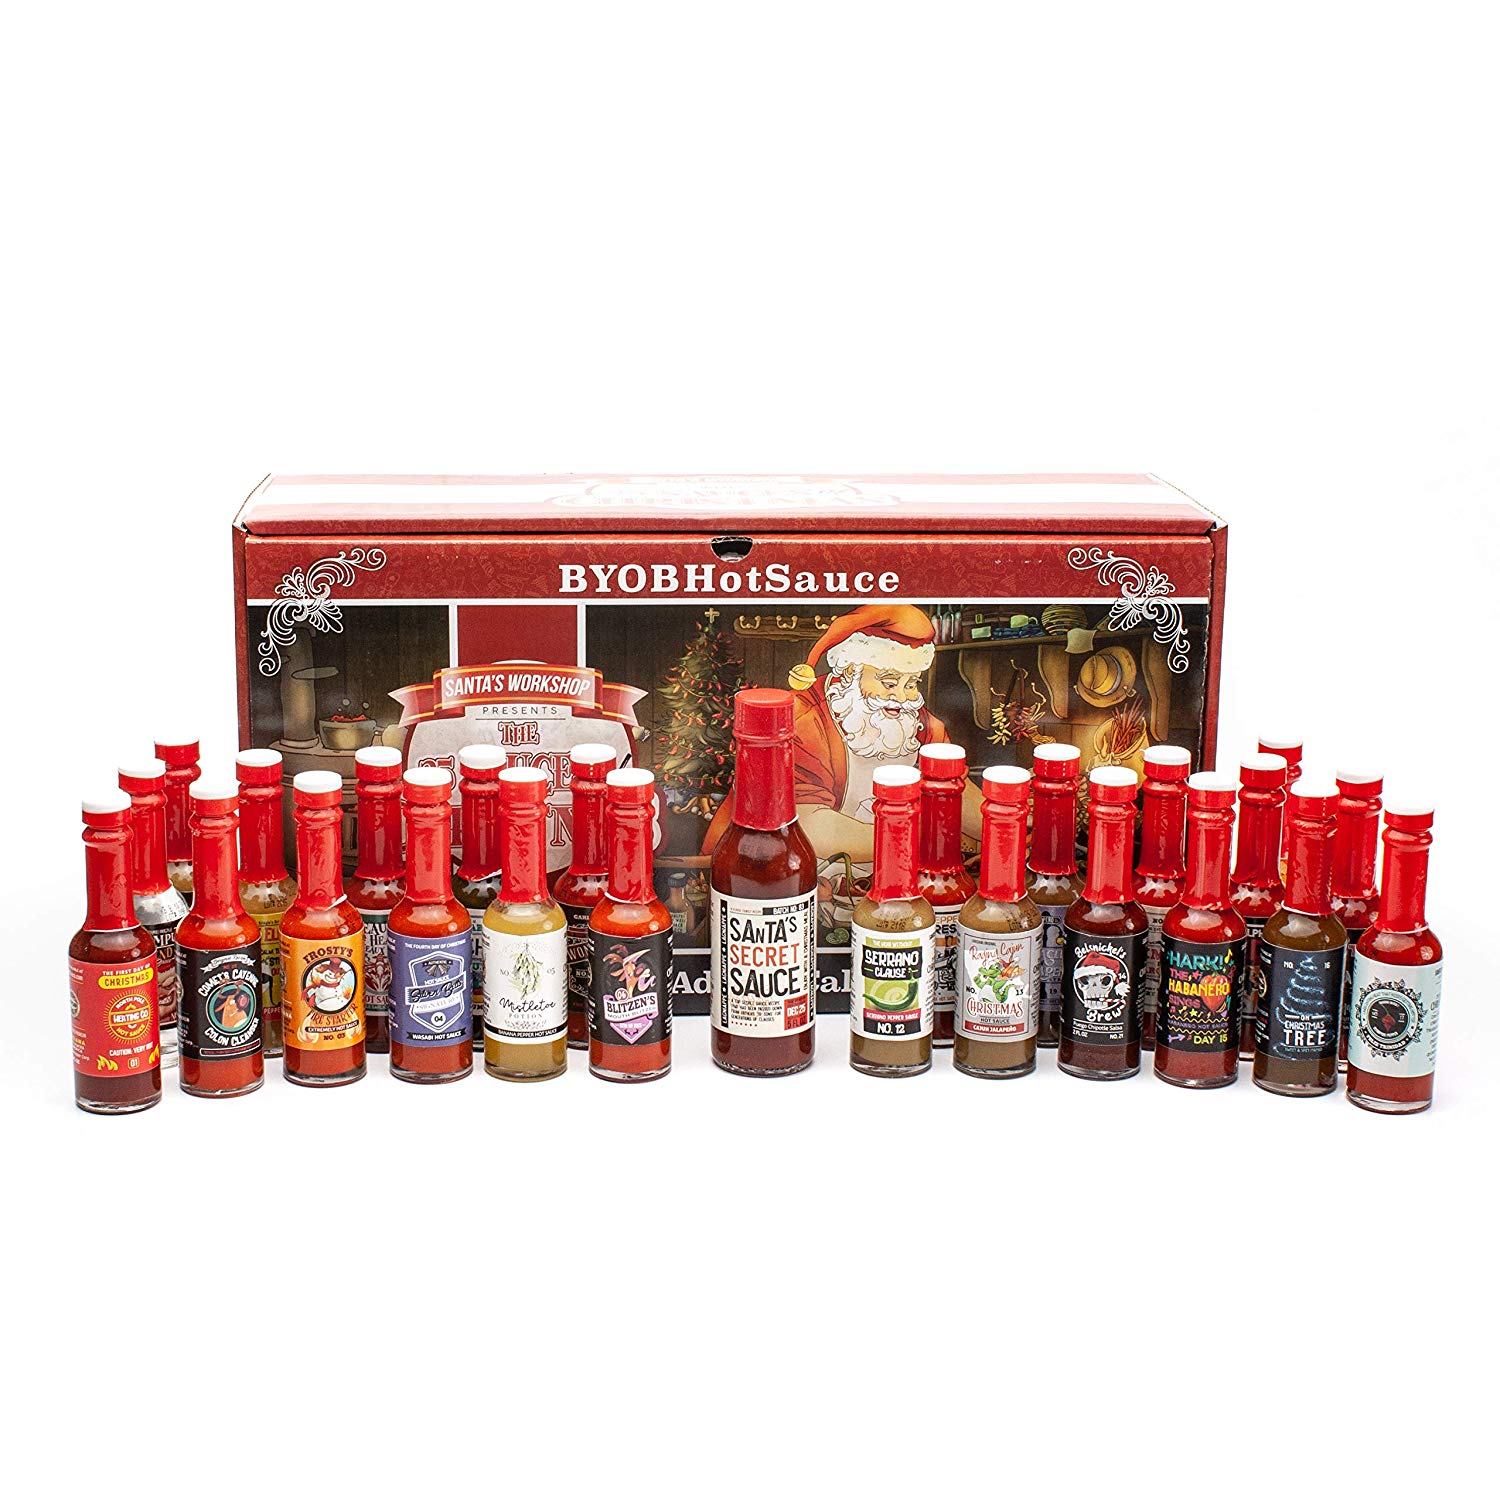 Hot Sauce Gift Set - Advent Calendar - The 25 Sauces of Christmas Countdown to Santa Clause, $79 @amazon.com